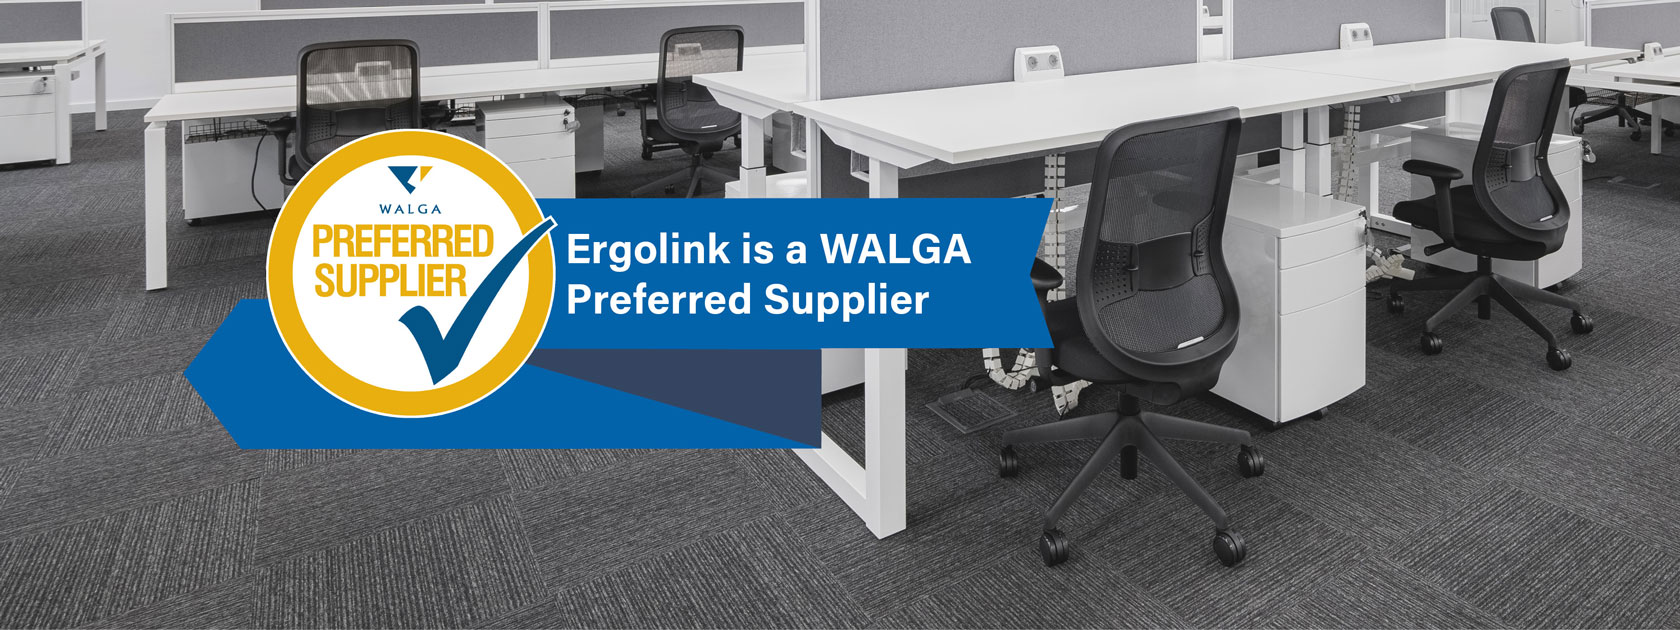 Ergolink WALGA Preferred Supplier Banner